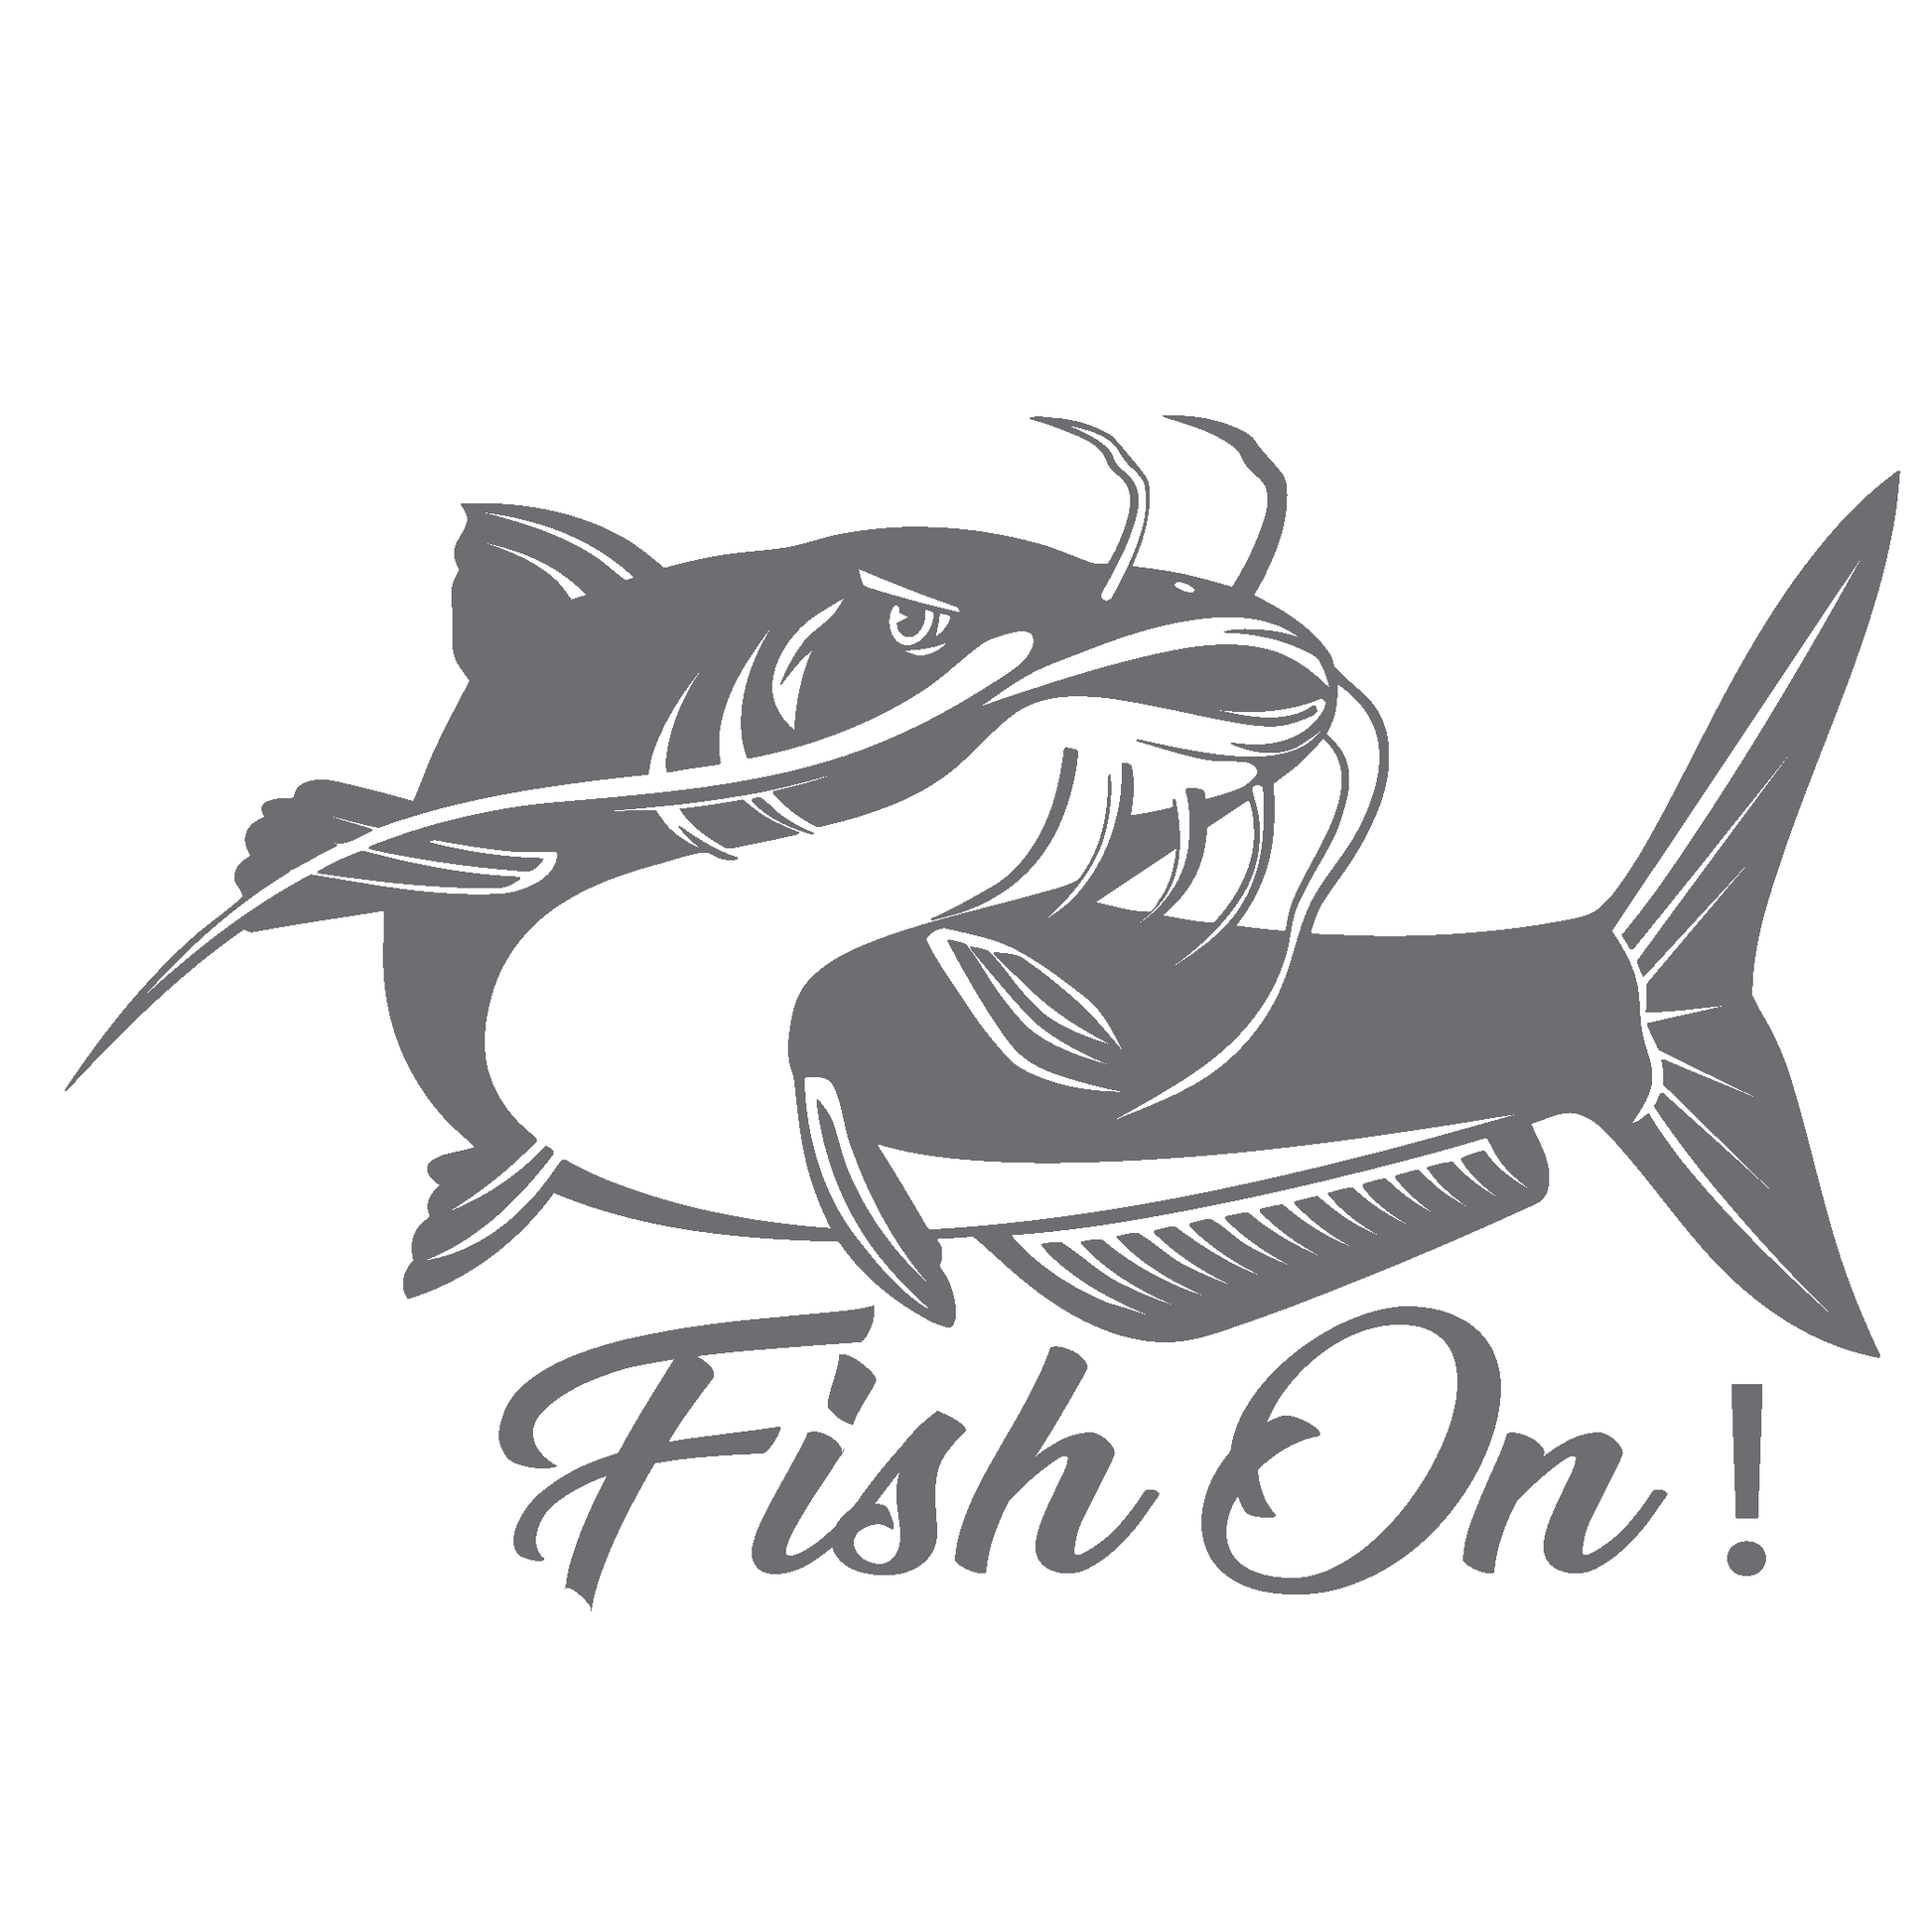 Catfish, Fish On! for Corn Hole Boards – Shop Vinyl Design